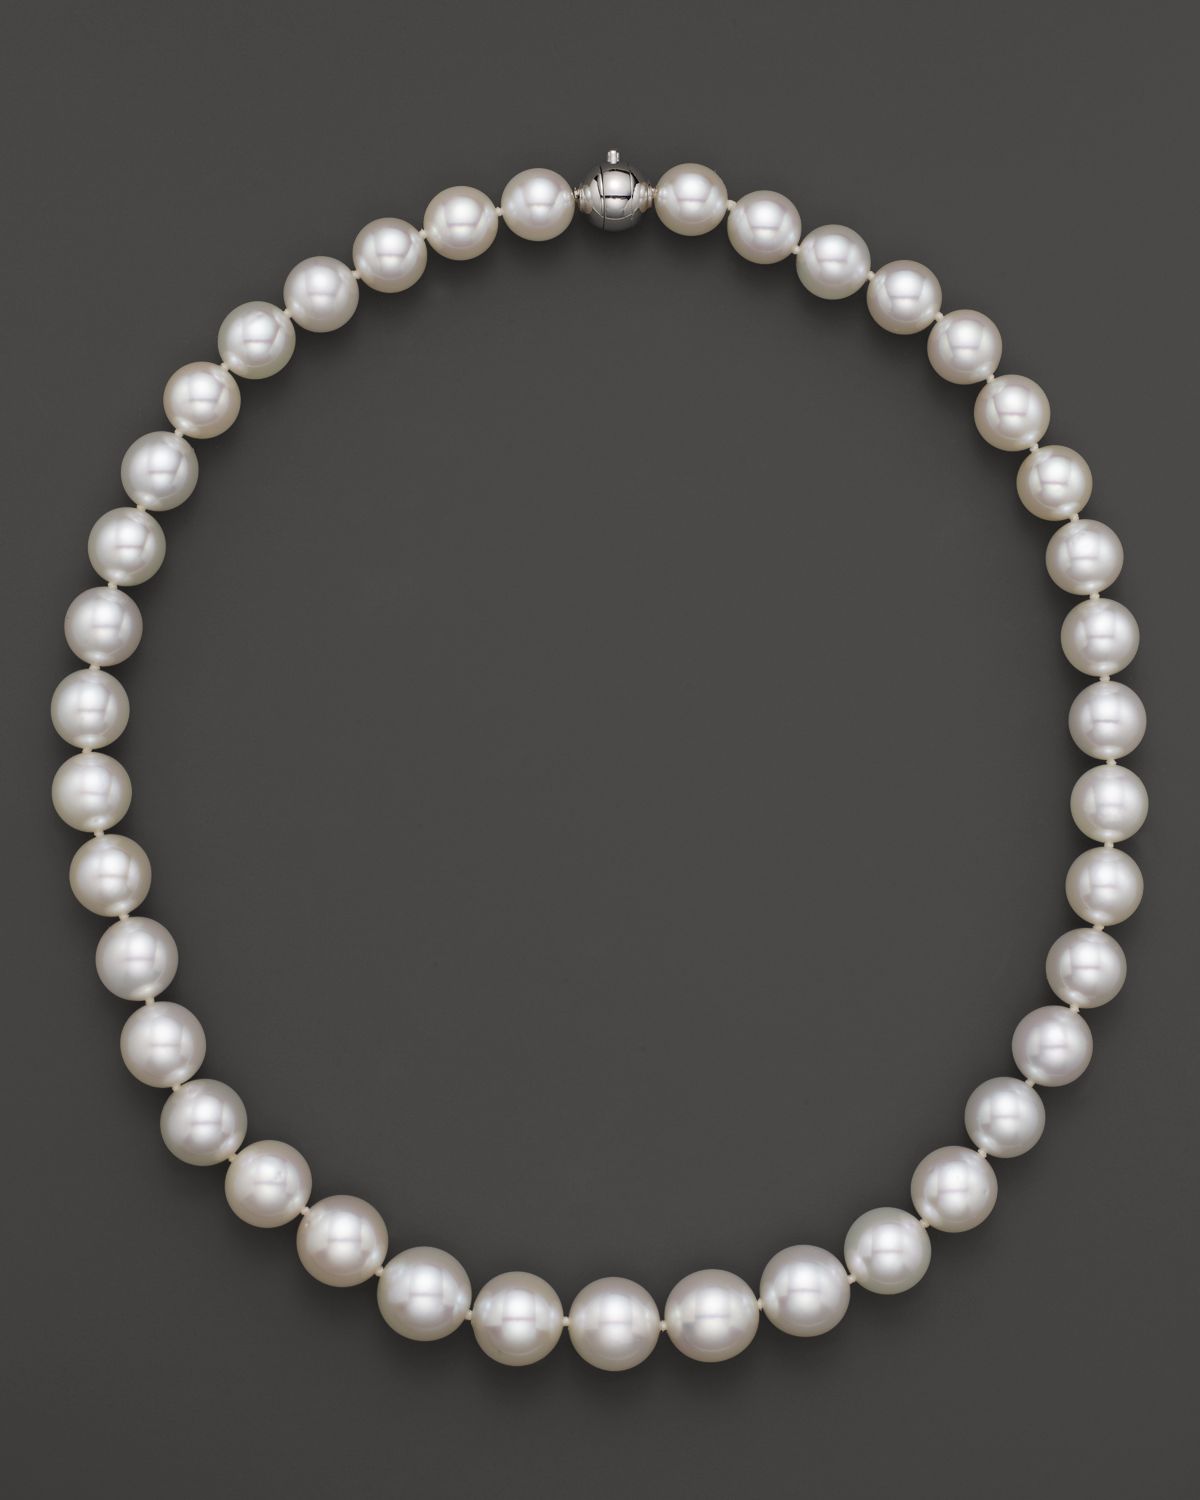 Tara pearls White South Sea Cultured Pearl Strand Necklace, 17